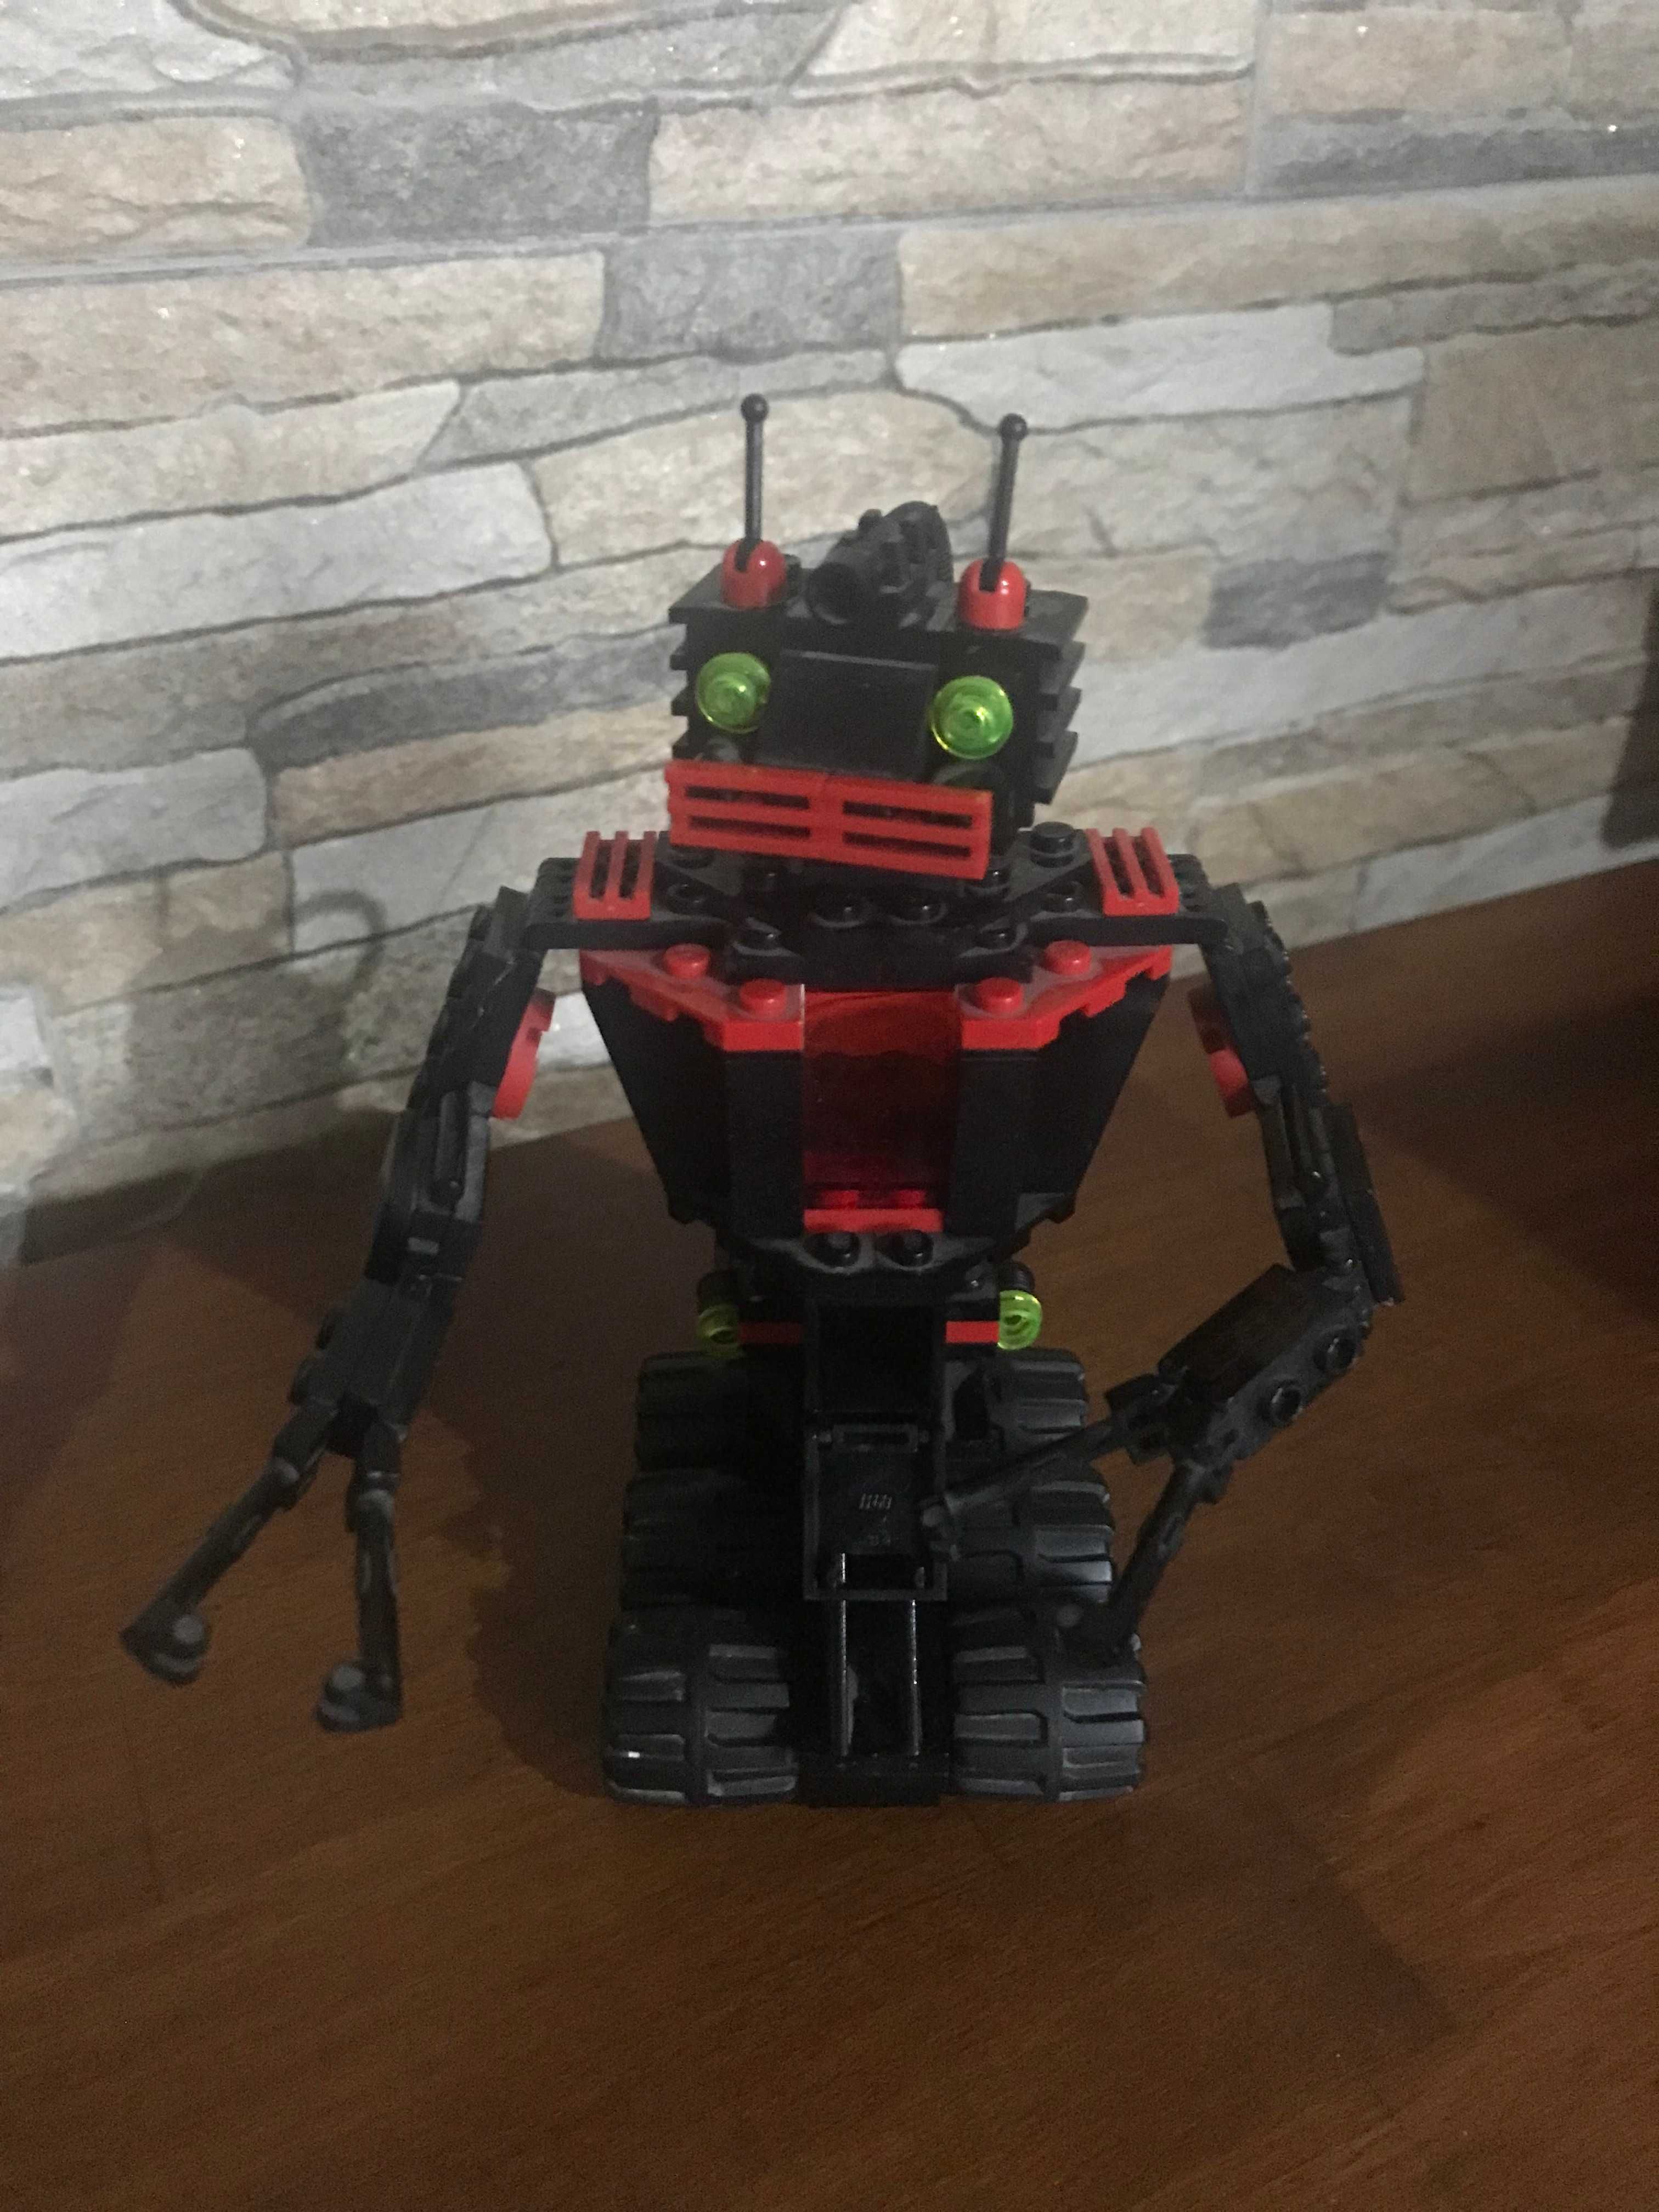 Robot LEGO tehnic model clasic